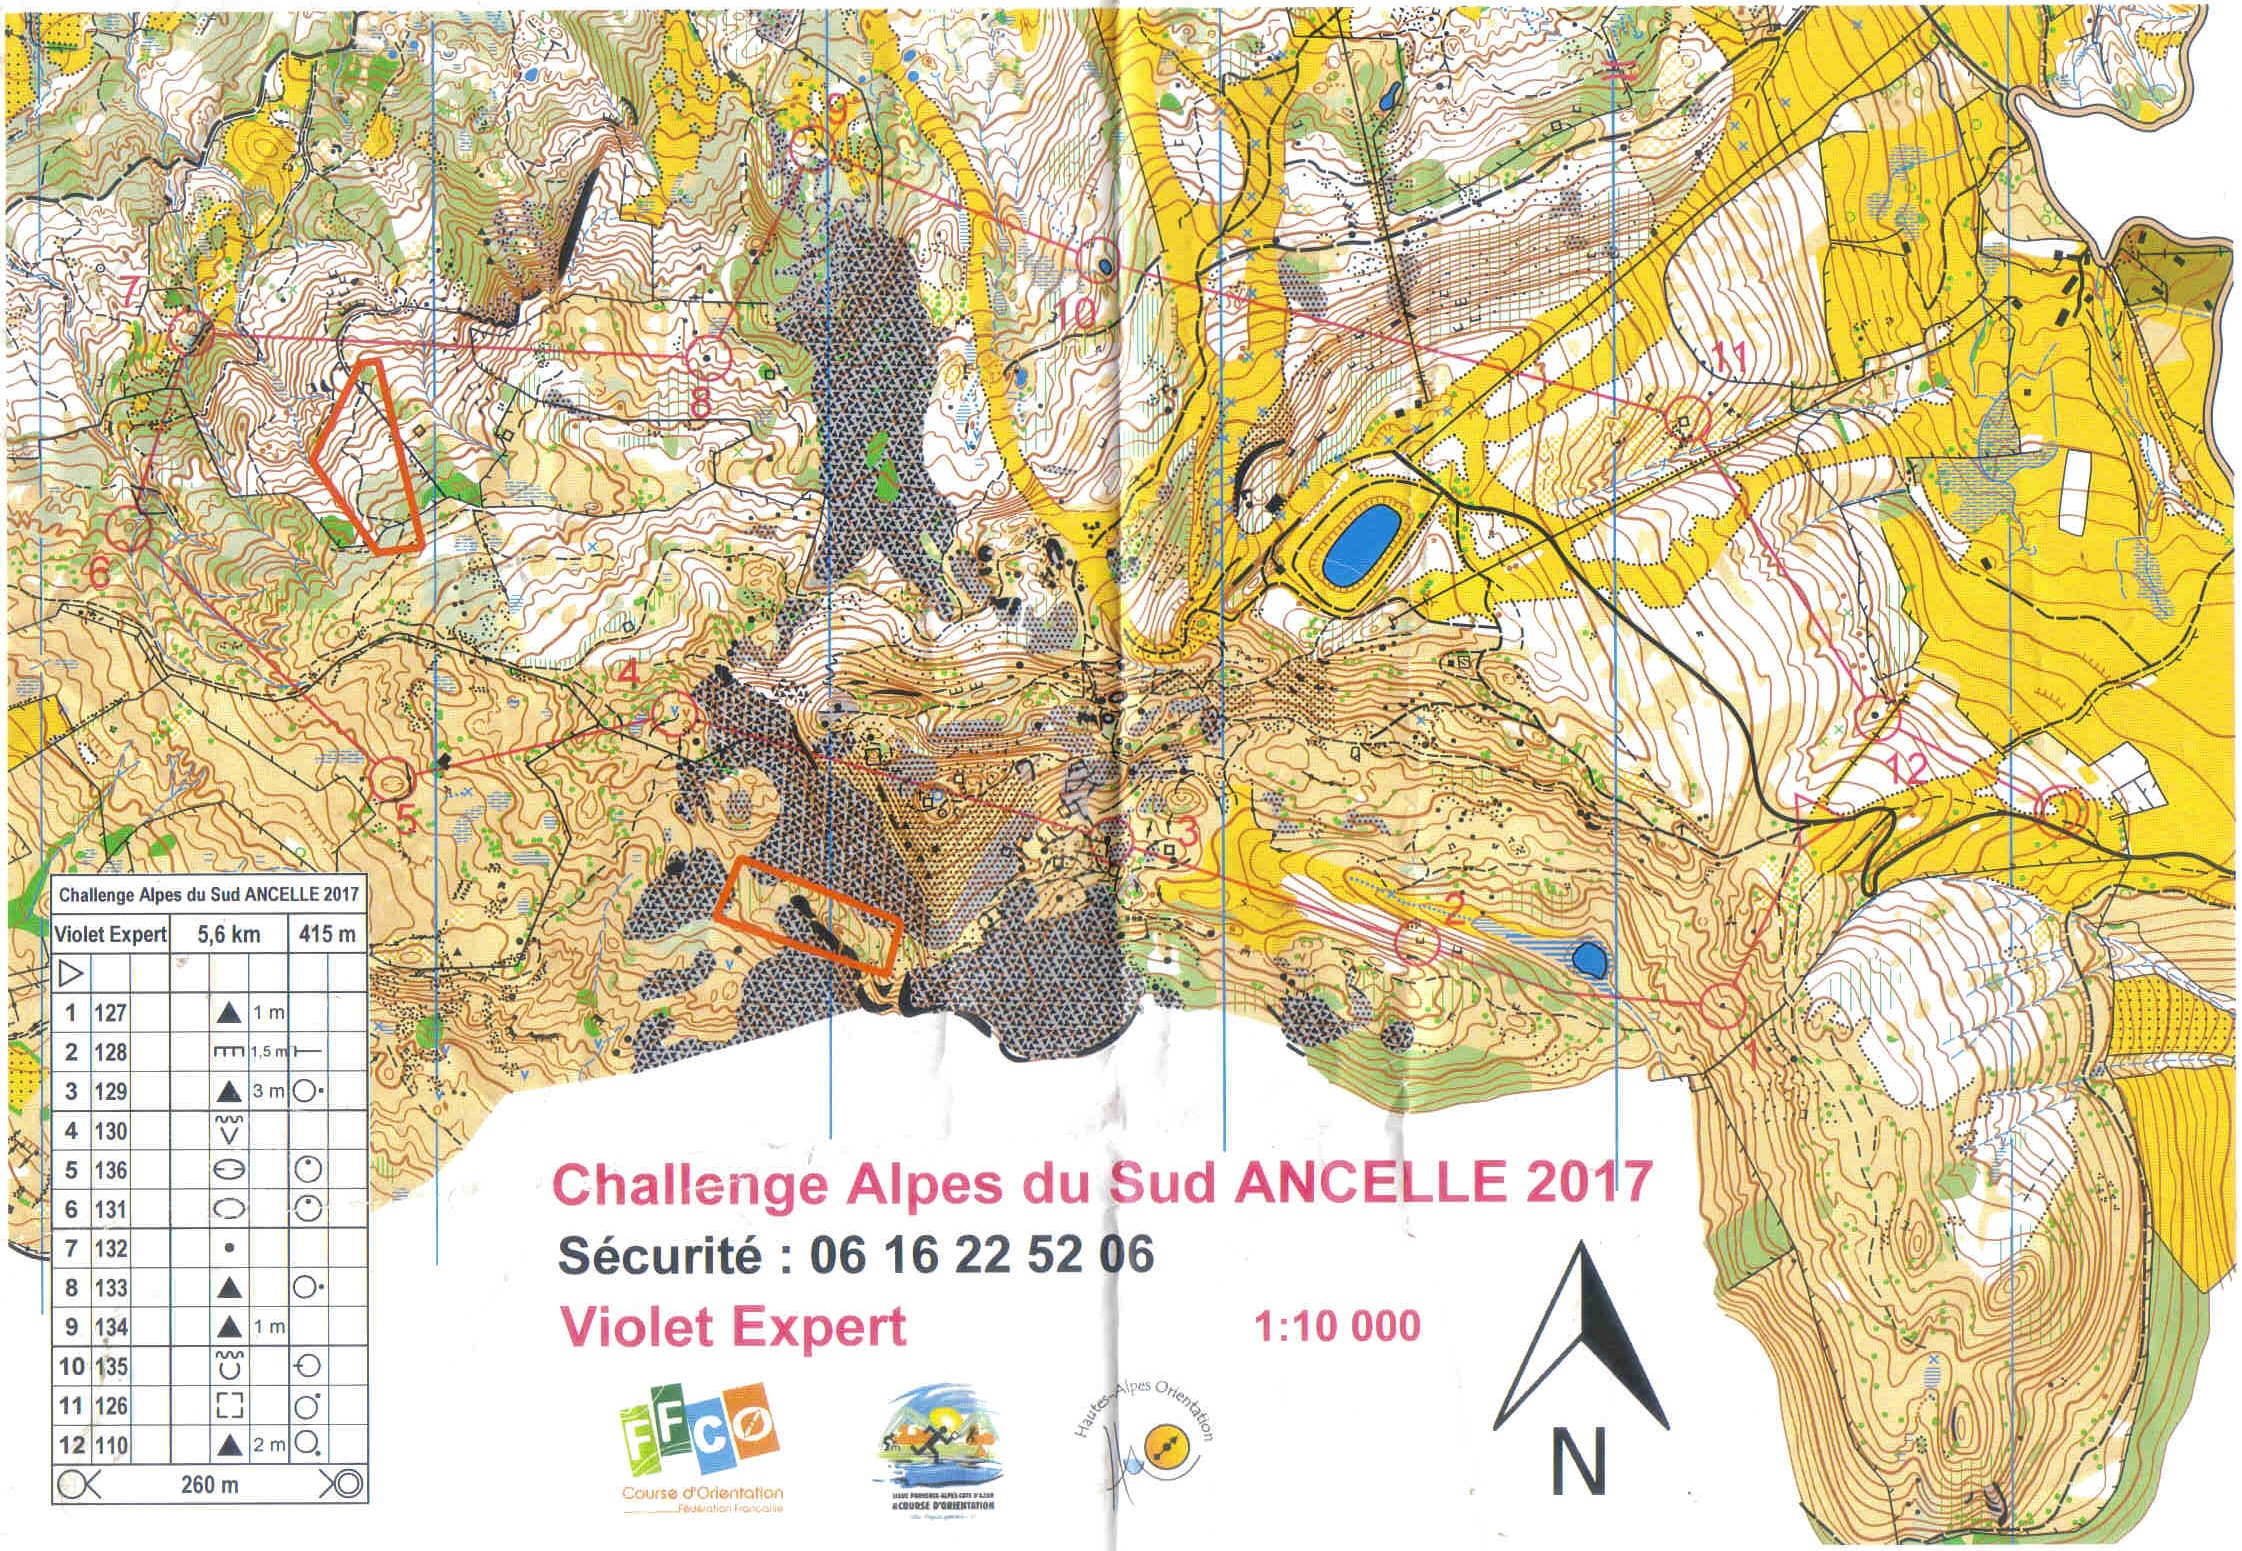 Challenge Alpes du Sud (14-10-2017)